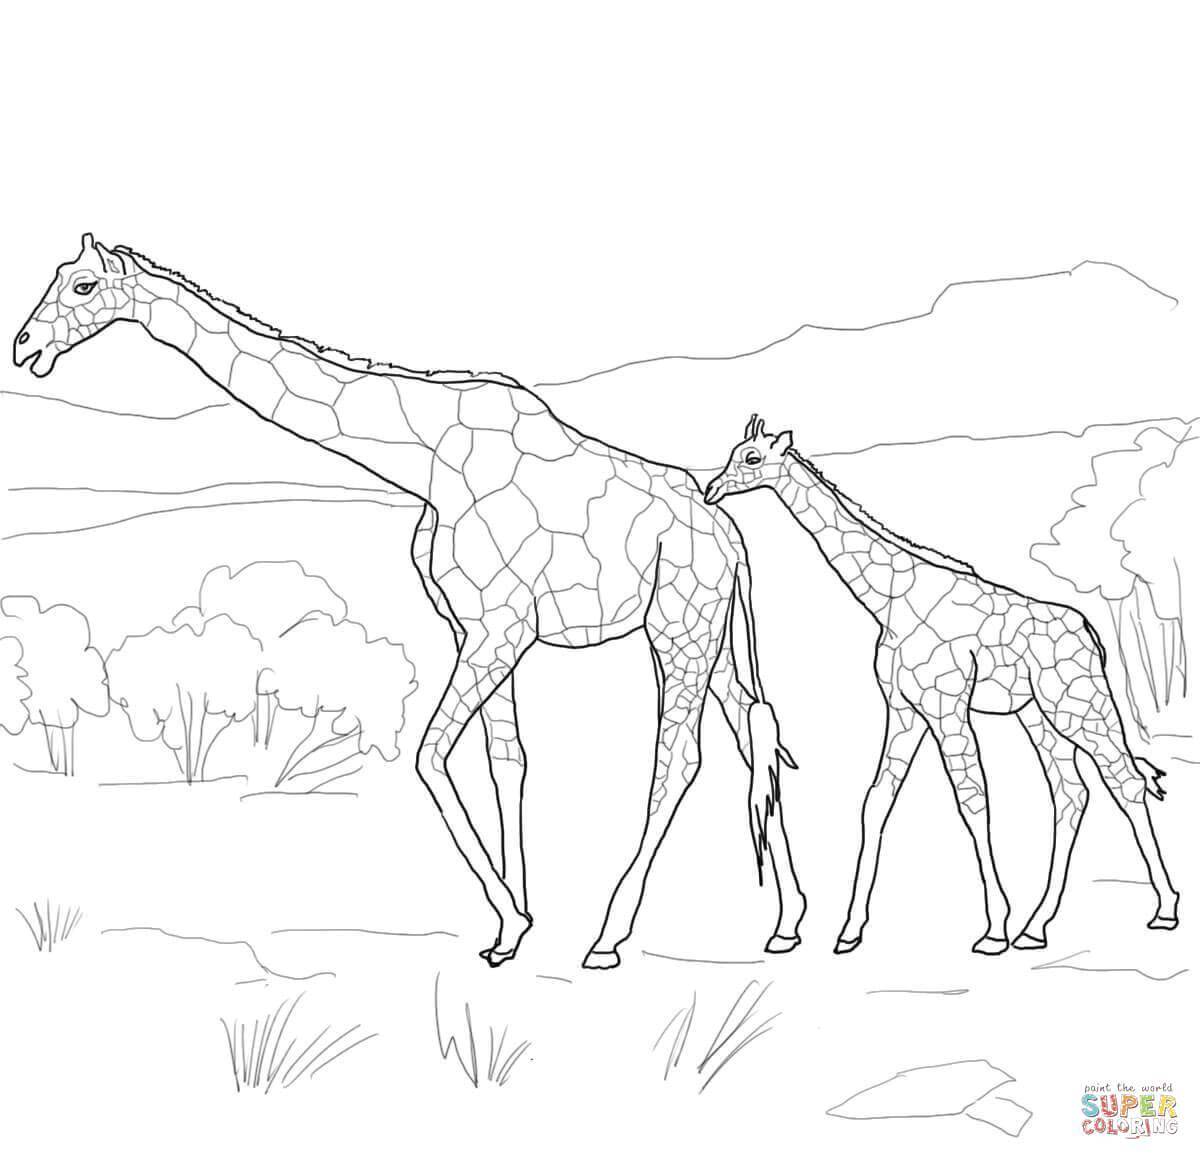 Coloring Giraffes on Safari. Category Animals. Tags:  Animals, giraffe.